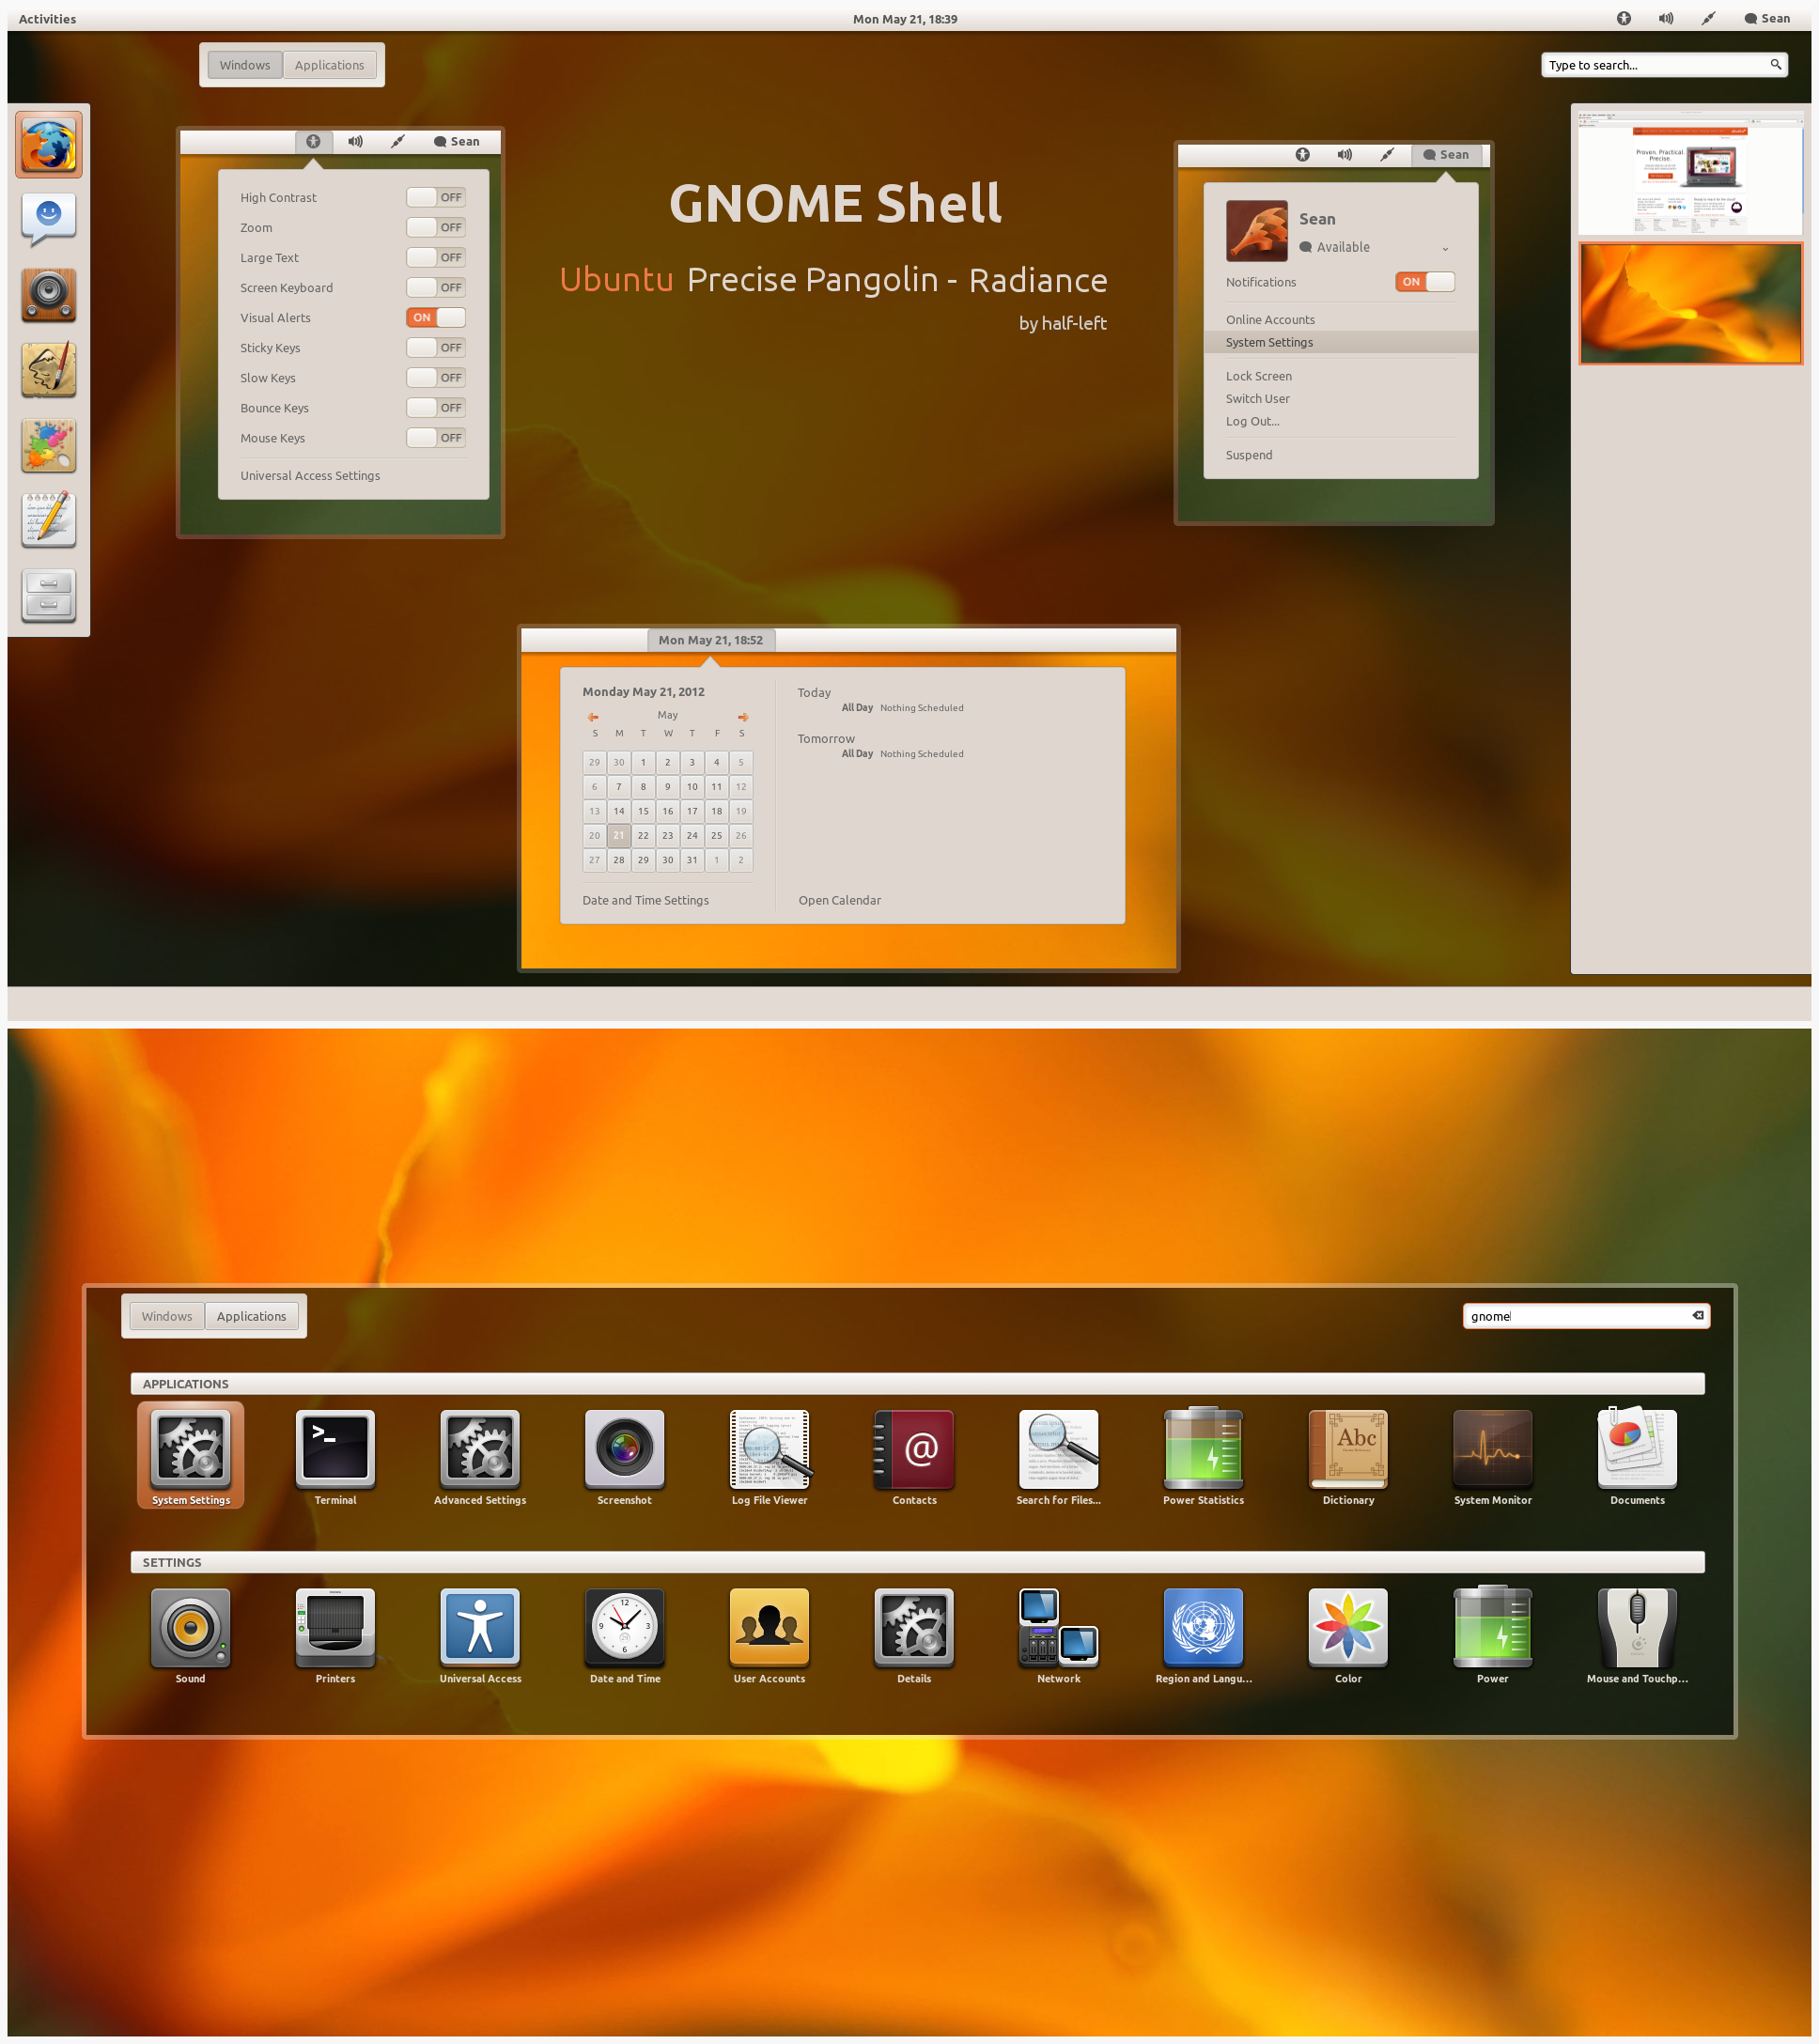 GNOME-Shell - Ubuntu Precise Pangolin - Radiance